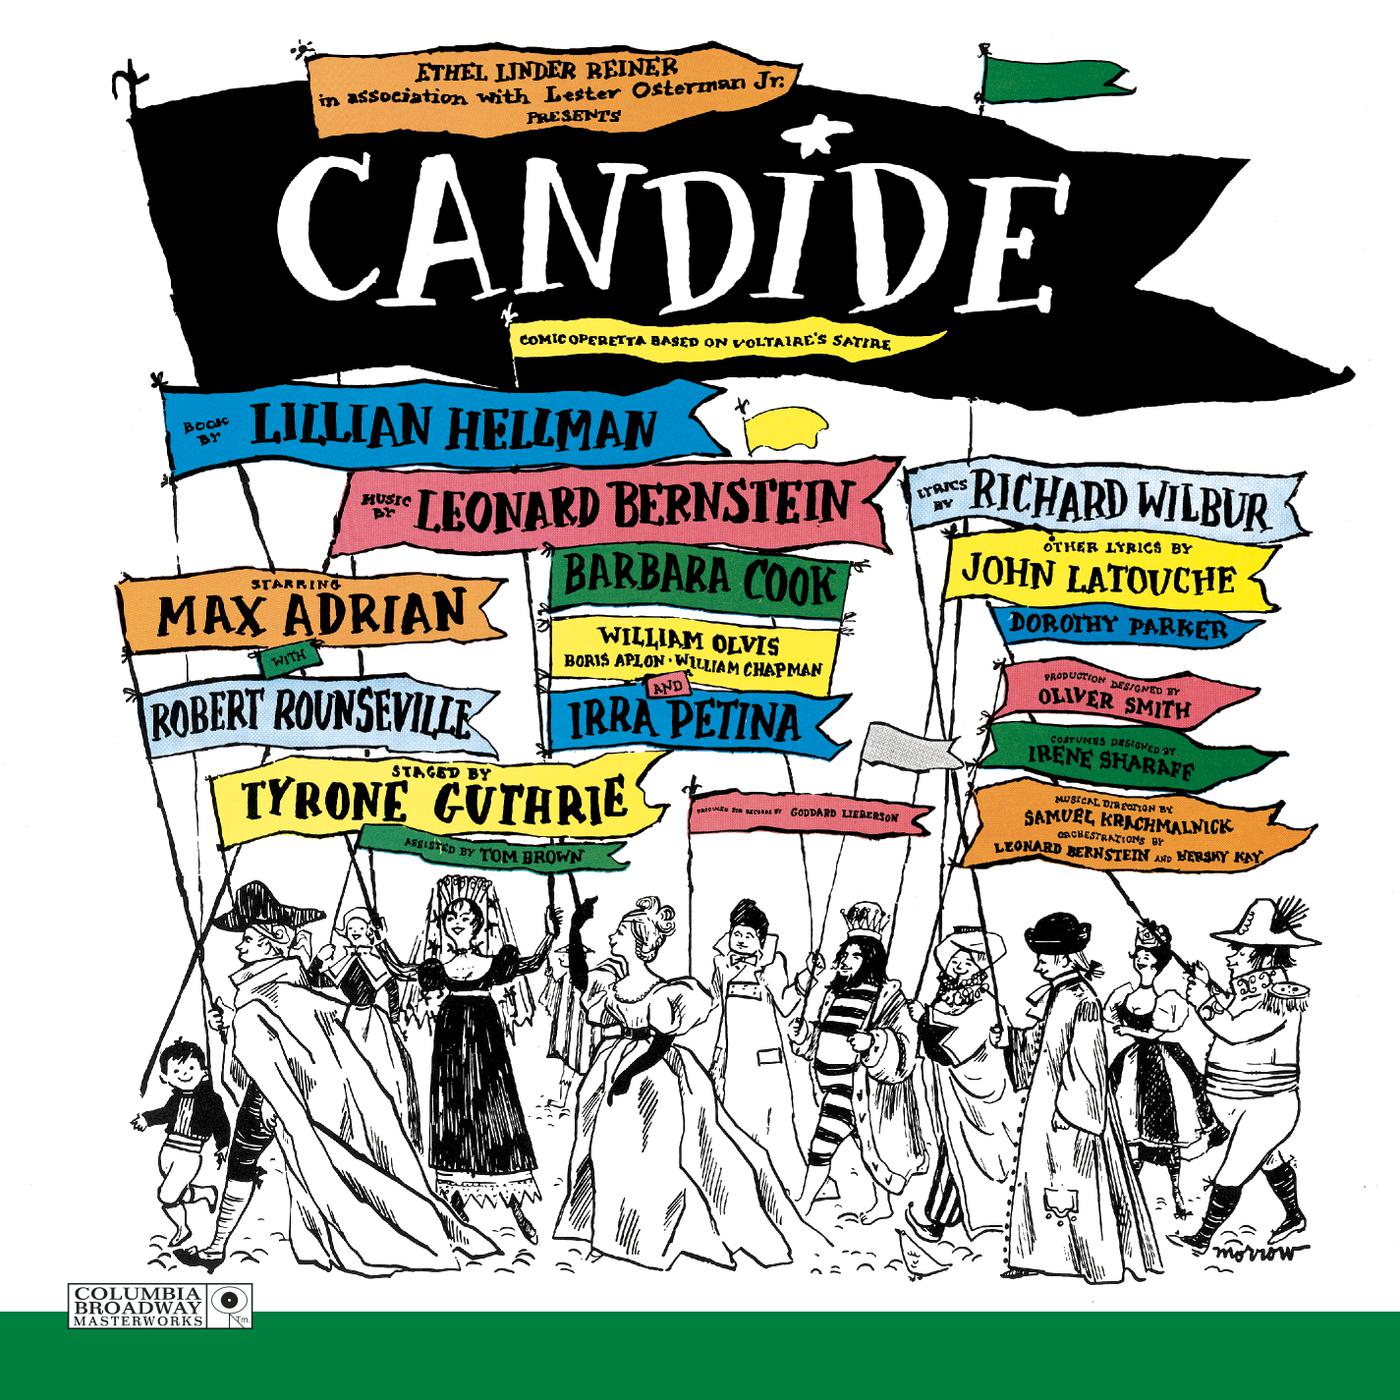 Robert Rounseville - Candide, Act II: Finale - Make Our Garden Grow